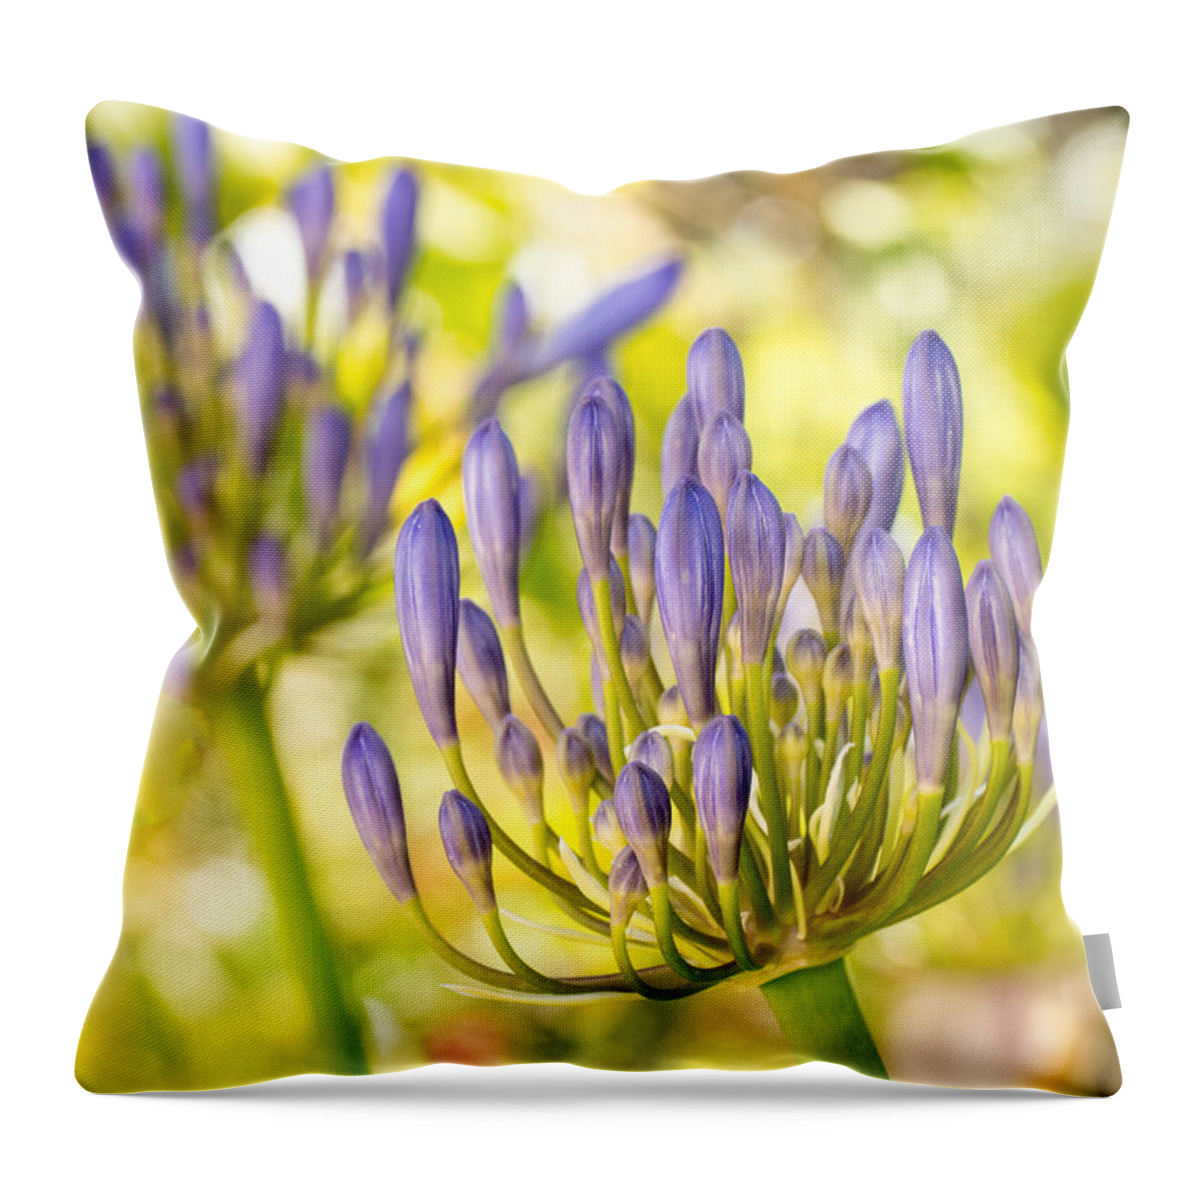 Flowers Throw Pillow featuring the photograph Purple Pods by Derek Dean